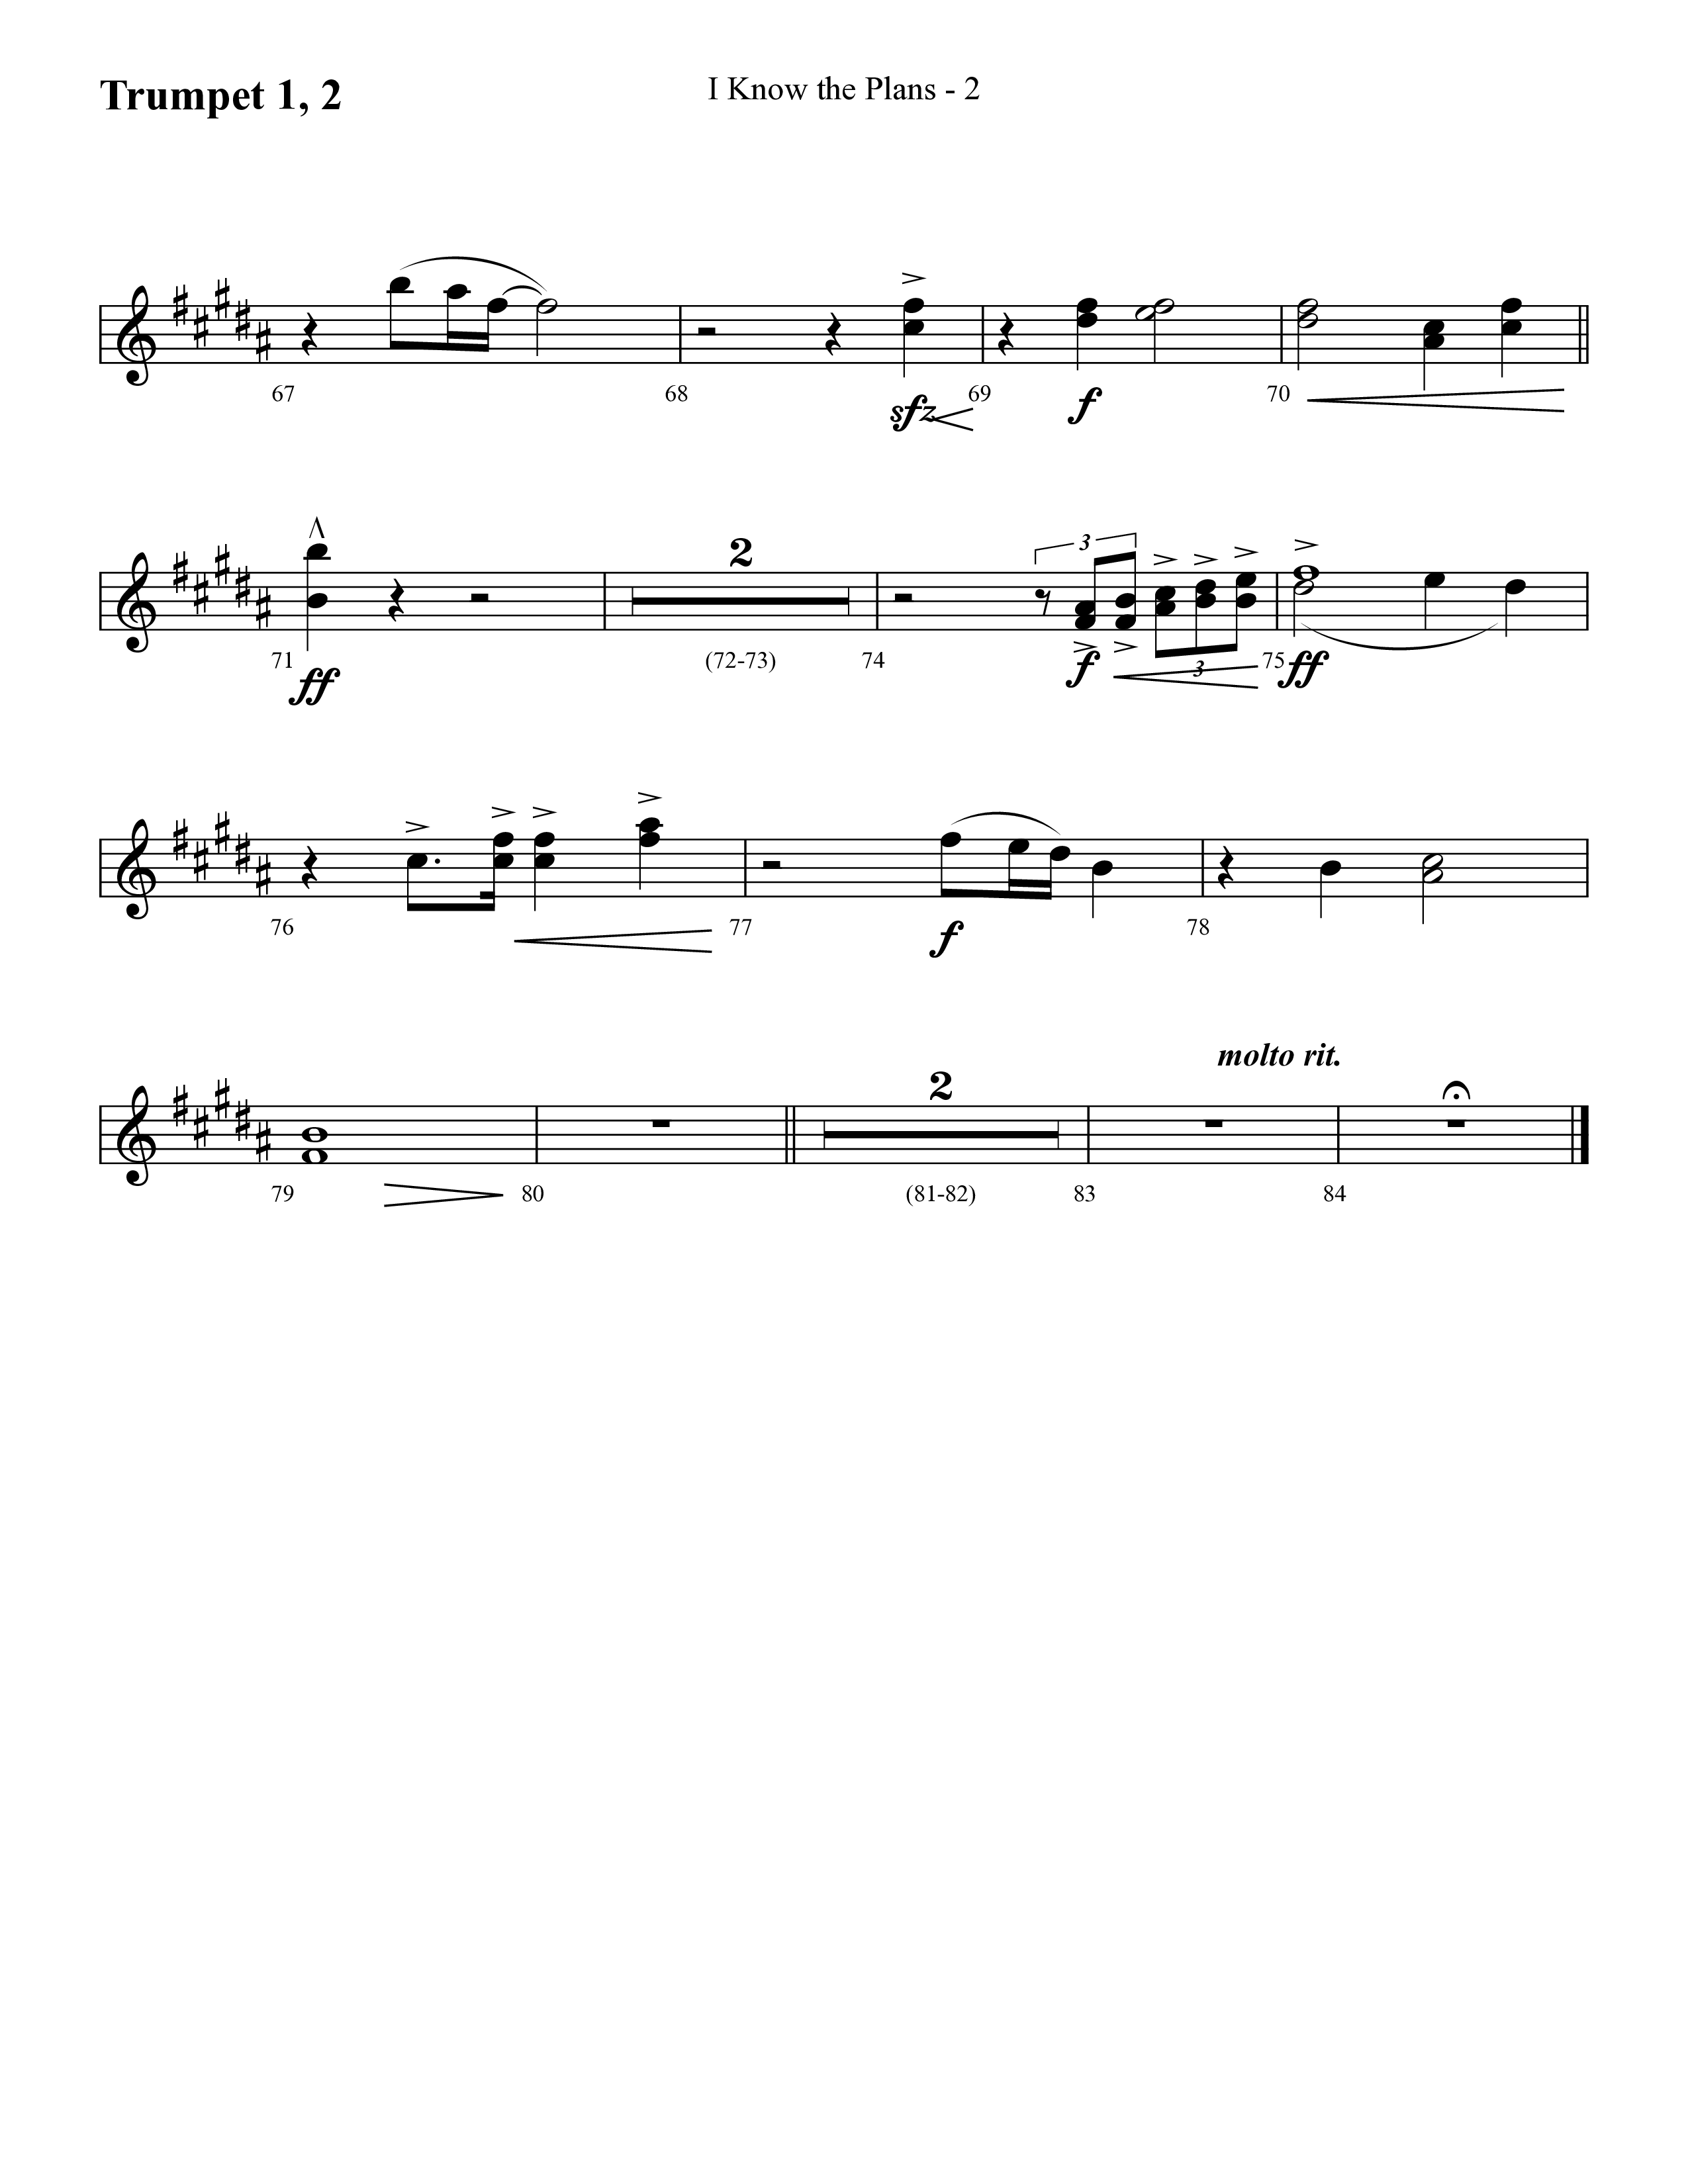 I Know The Plans (Choral Anthem SATB) Trumpet 1,2 (Lifeway Choral / Arr. Cliff Duren)